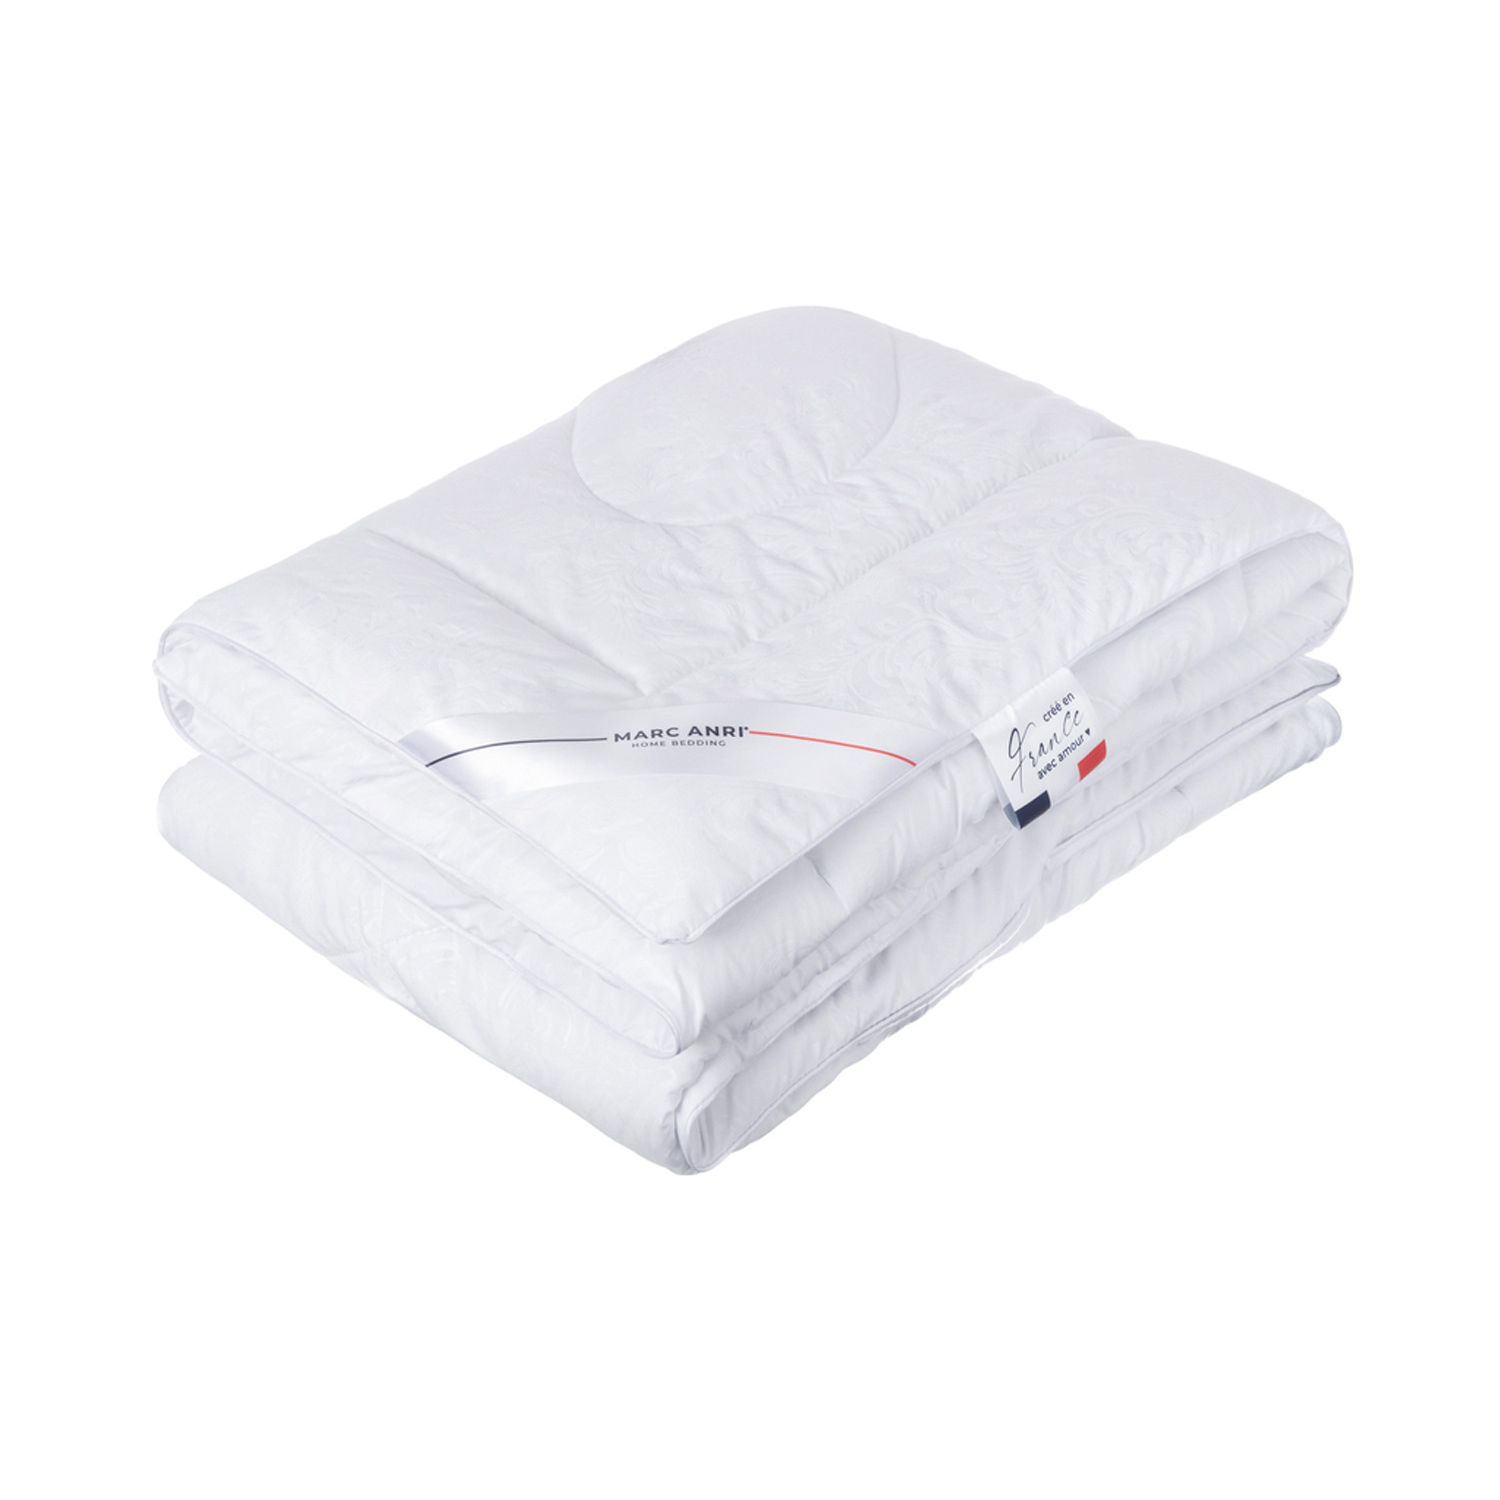 Одеяло Marc Anri Chinon белое 175х200 см (MA-MF) одеяло marc anri rouffach белое 200х220 см ma ec